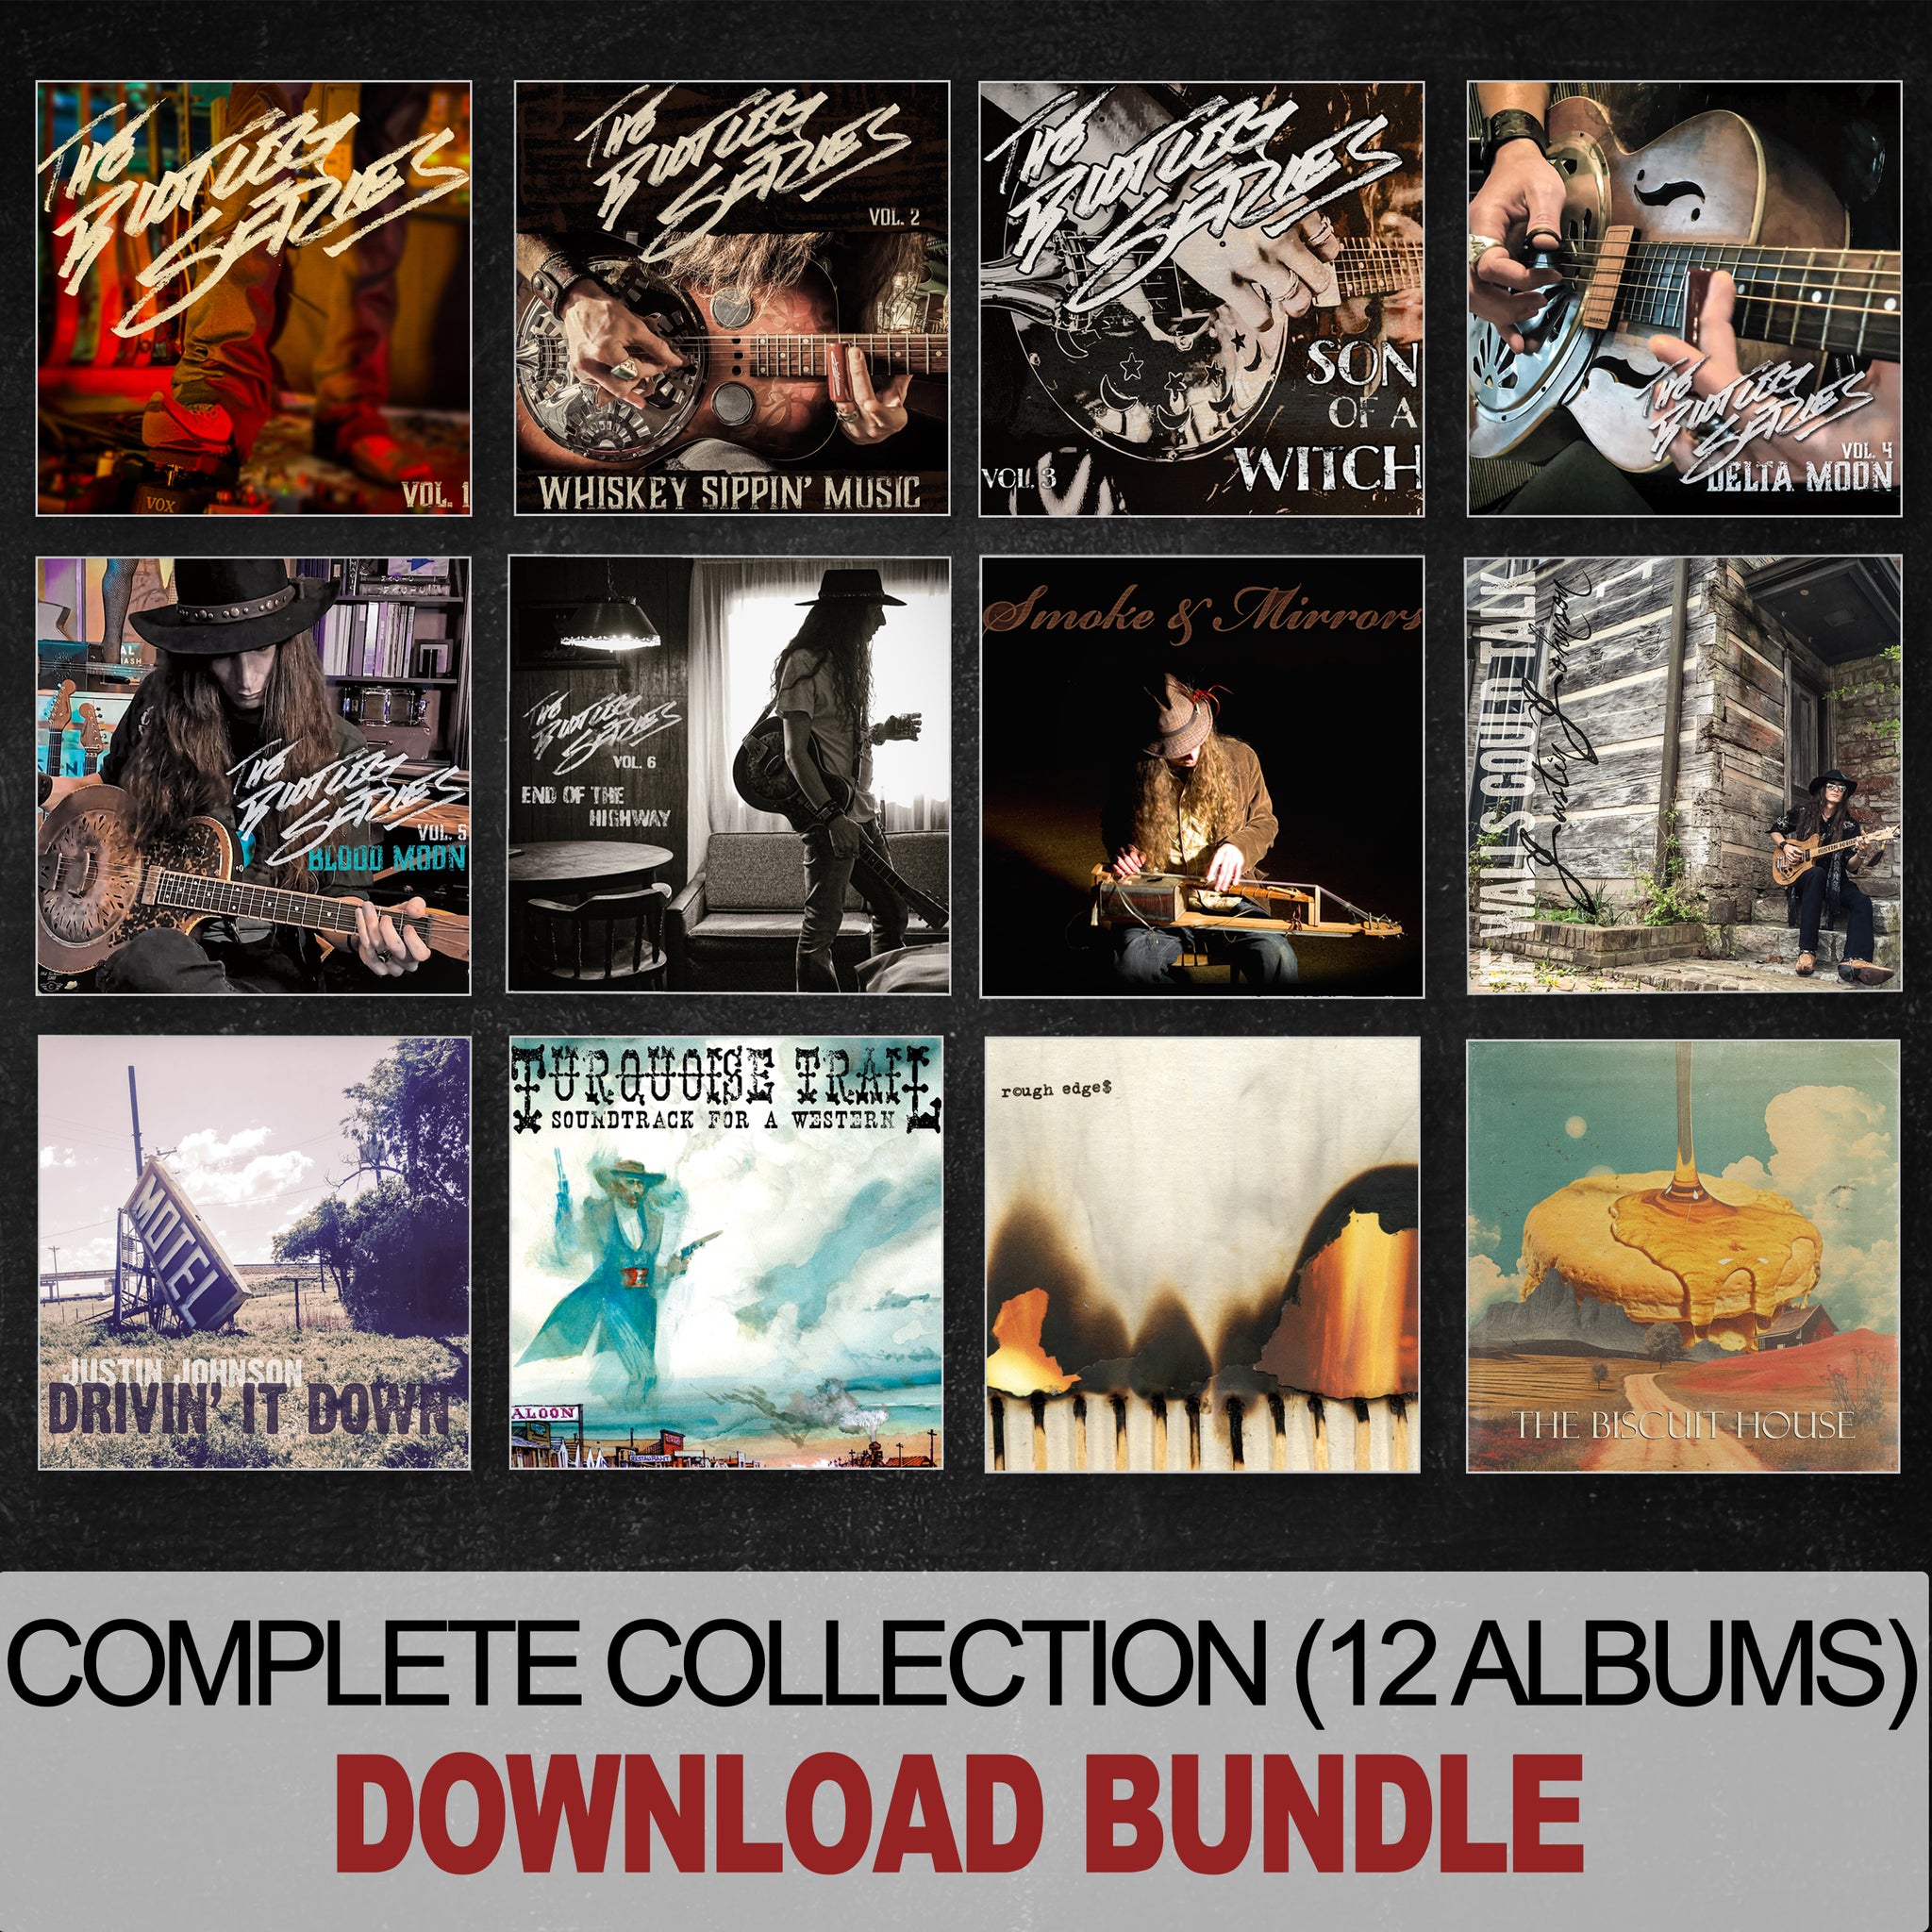 COMPLETE COLLECTION DOWNLOAD BUNDLE - All 12 Albums (DIGITAL)